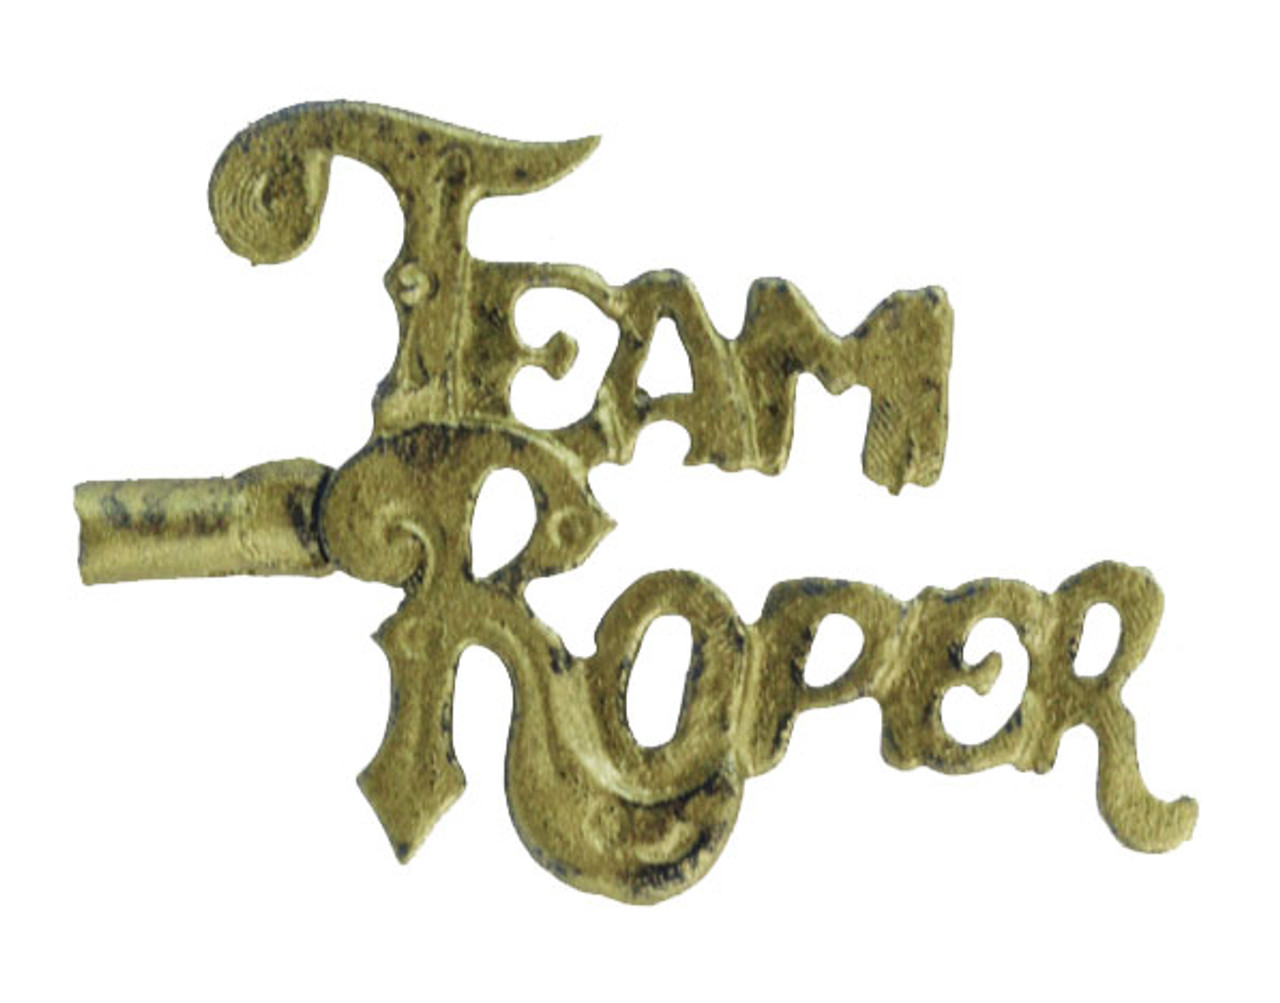 1" Team Roper